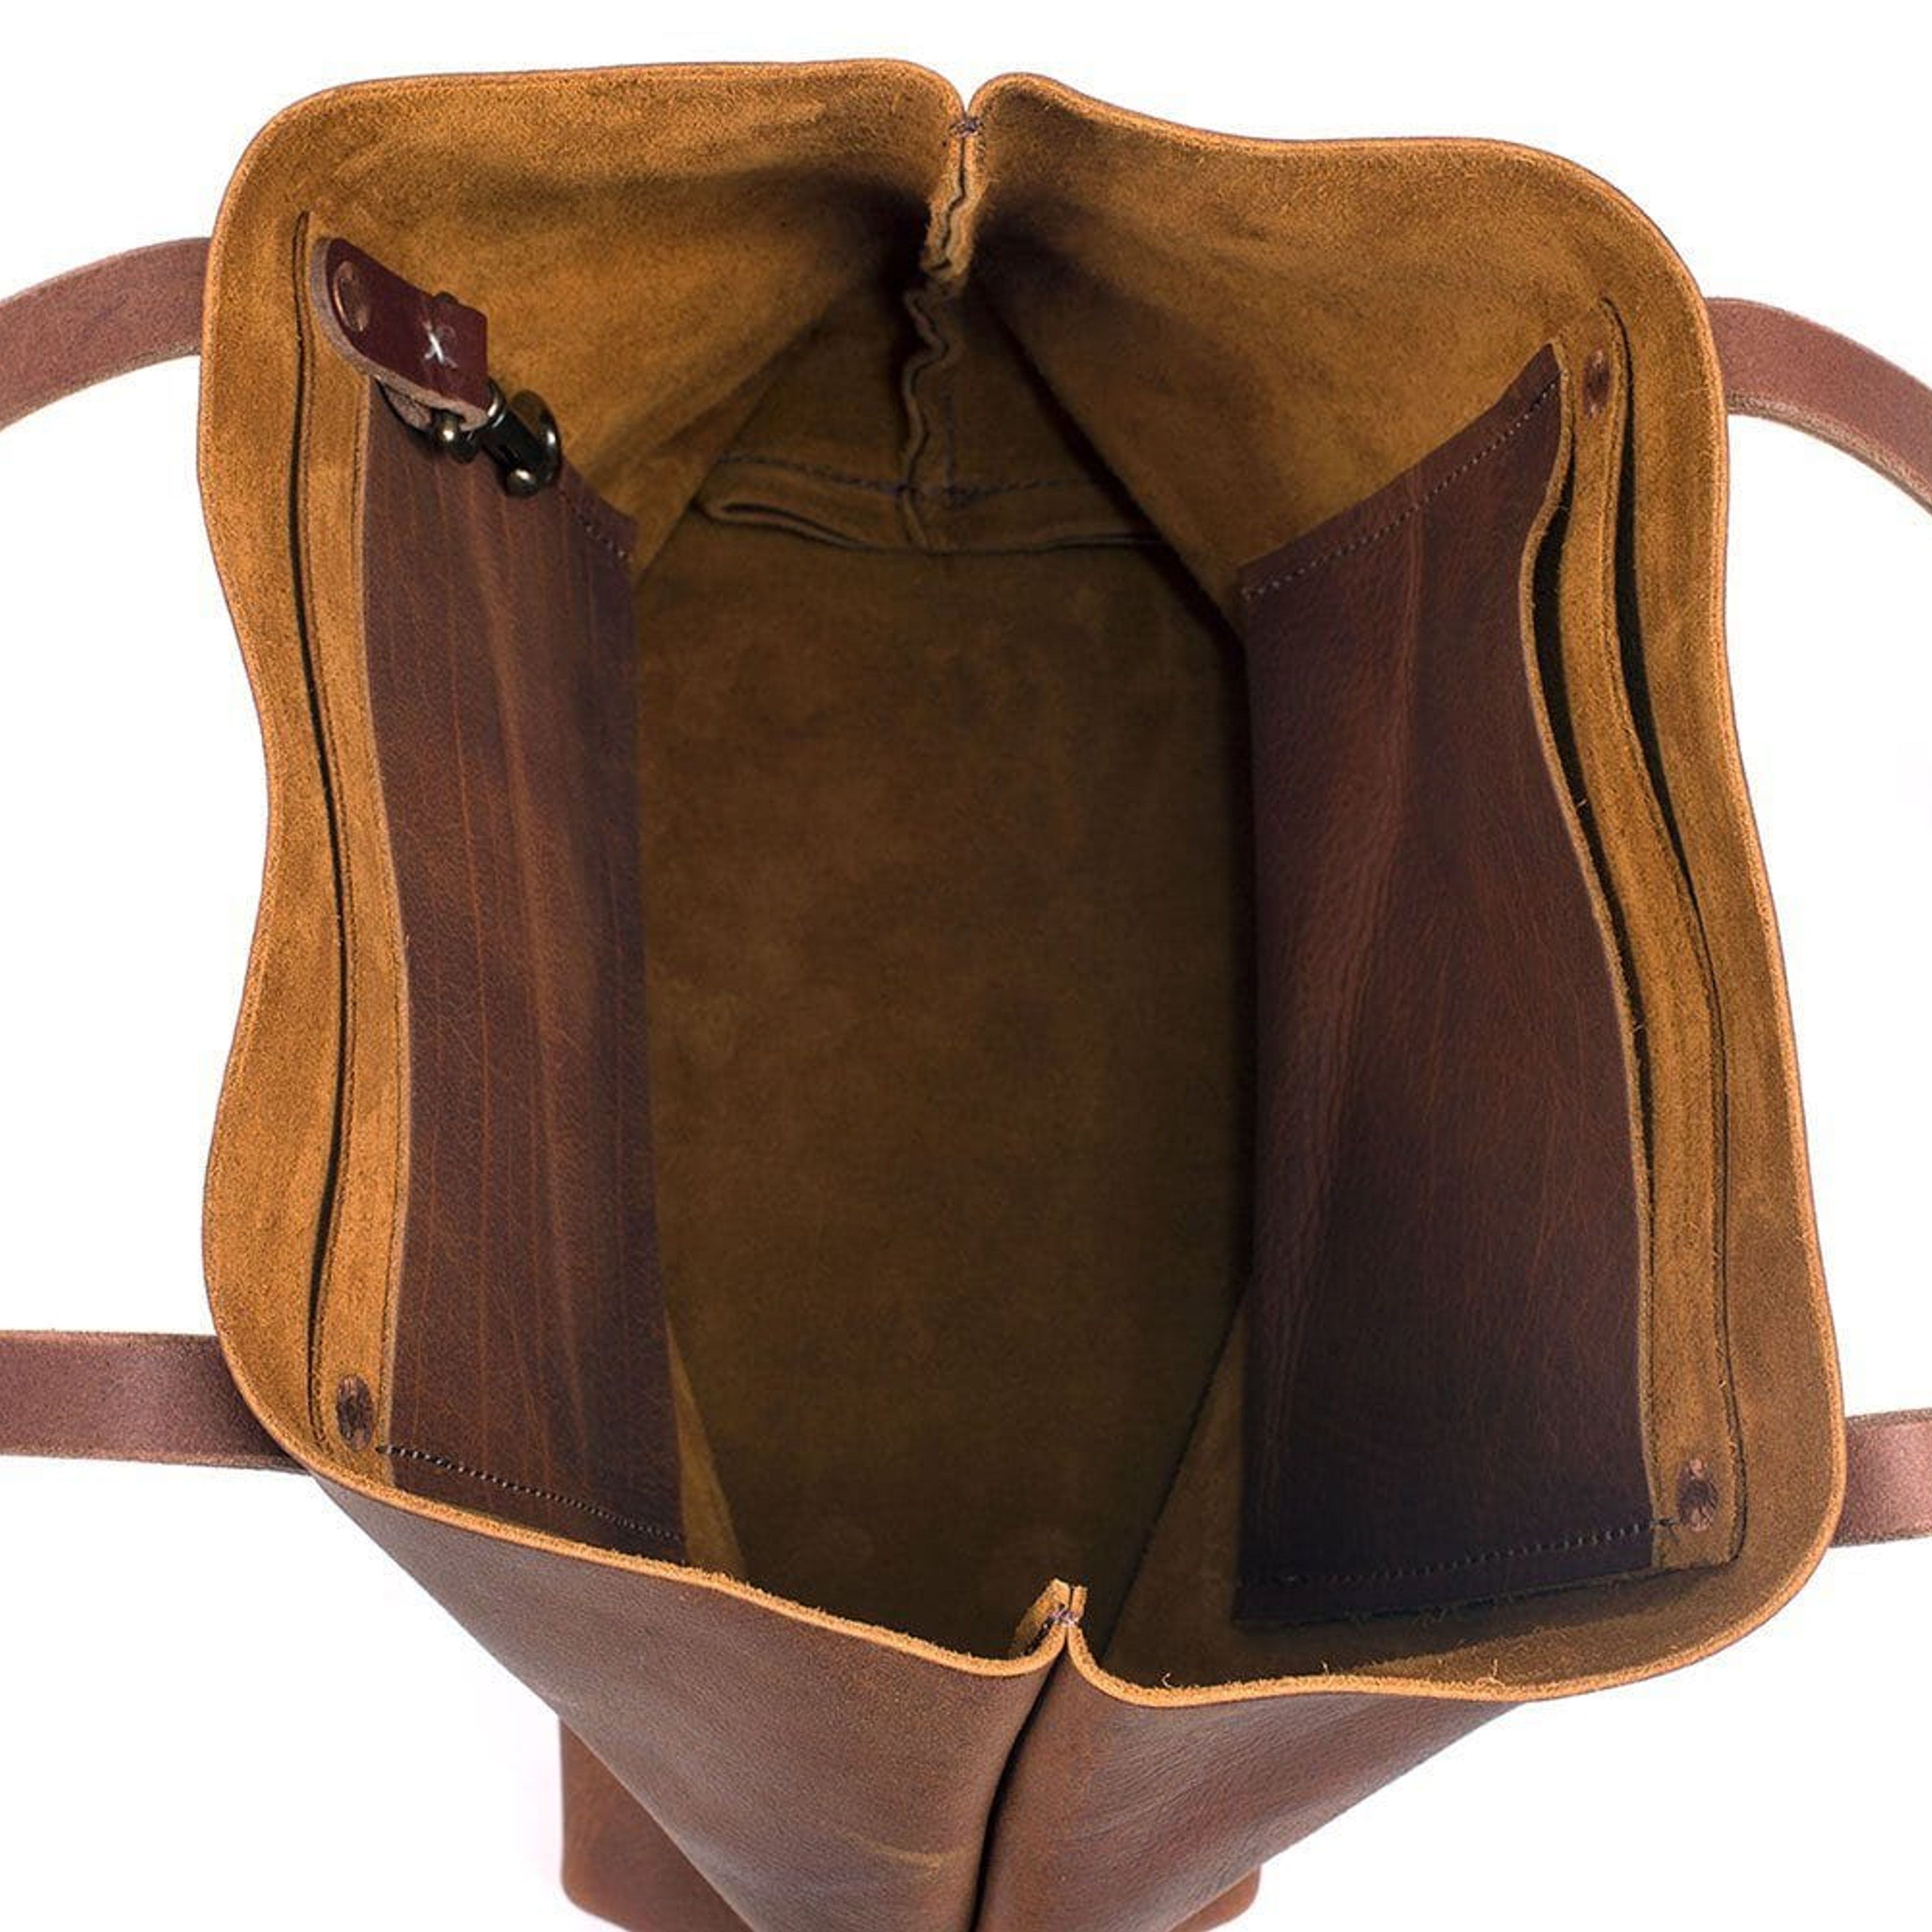 Avery Leather Tote Bag - Large - Caramel